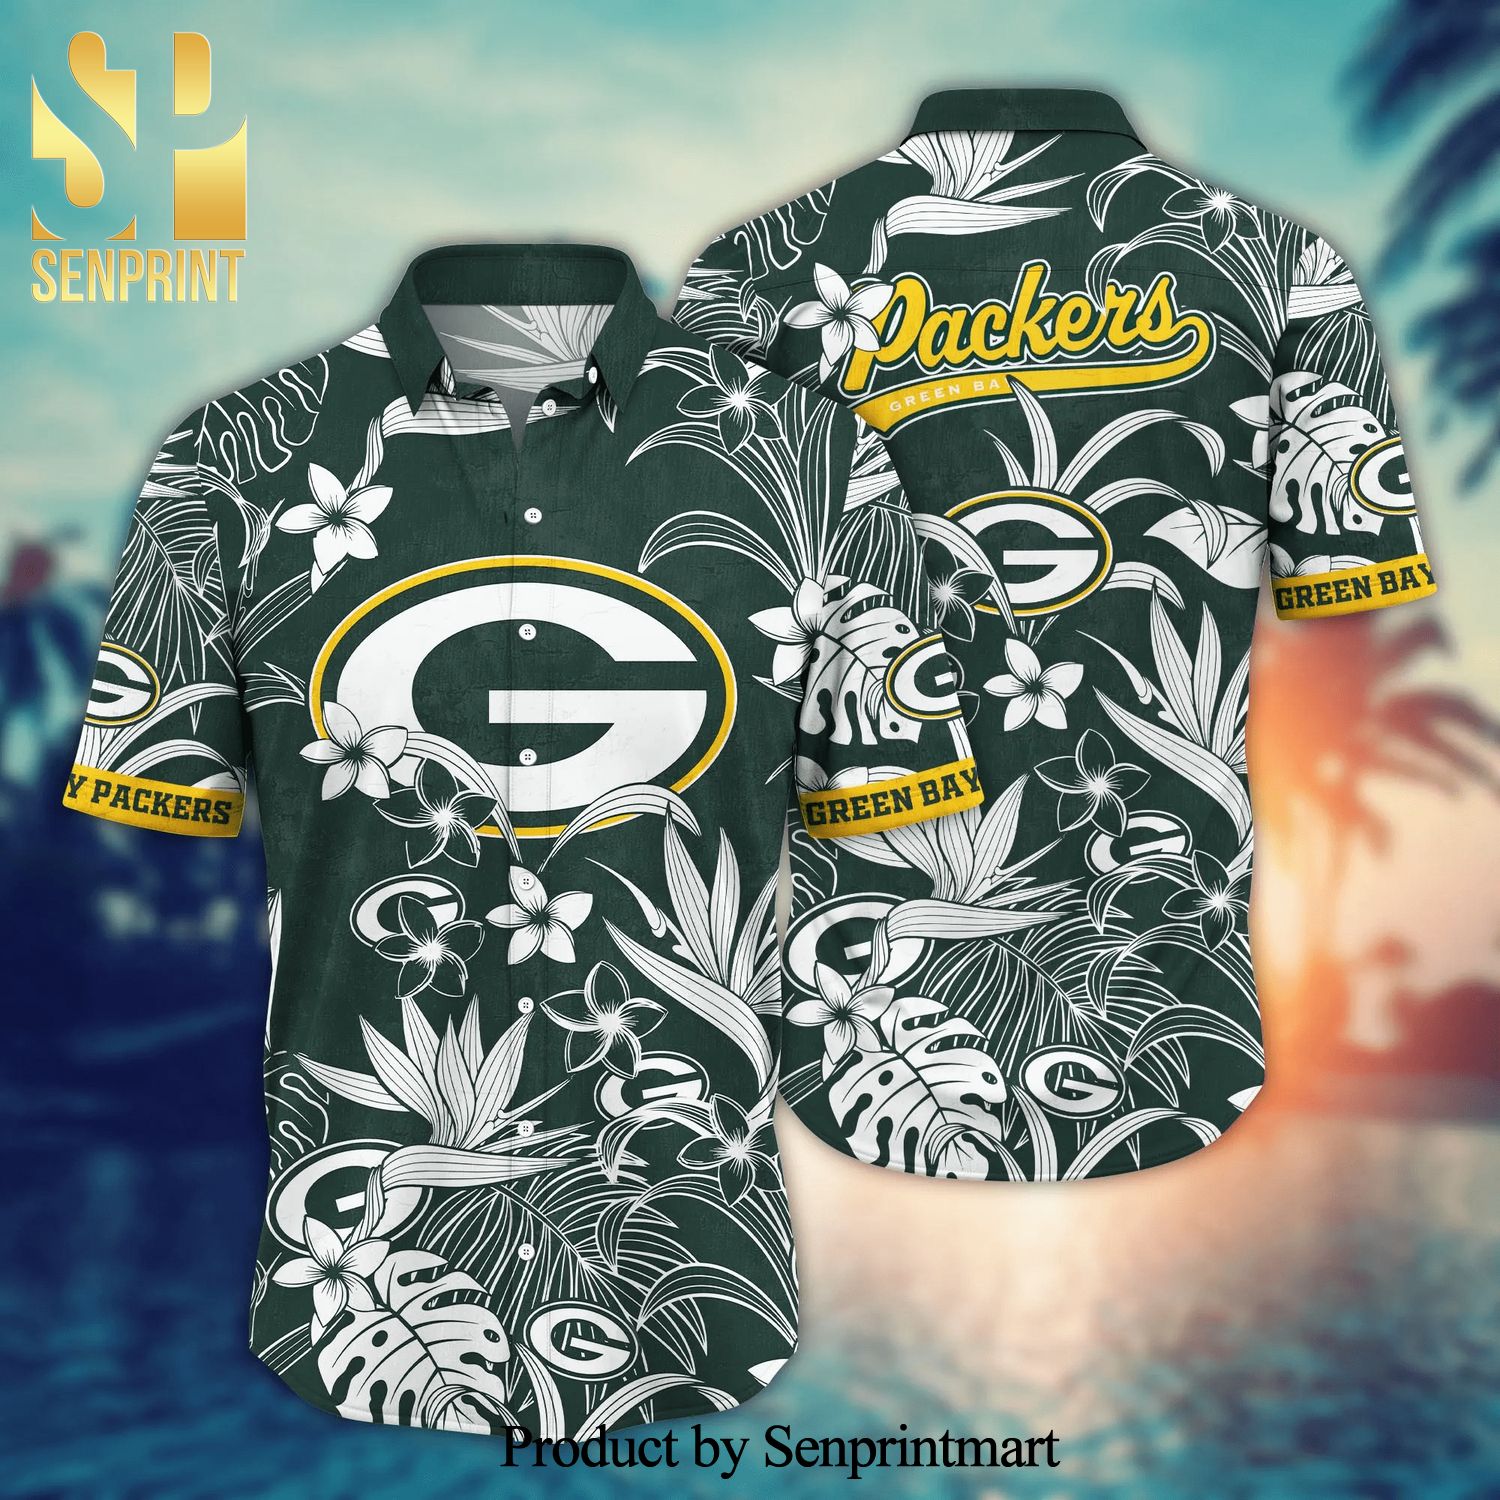 Green Bay Packers Custom Name Baseball Jersey NFL Shirt Best Gift For Fans